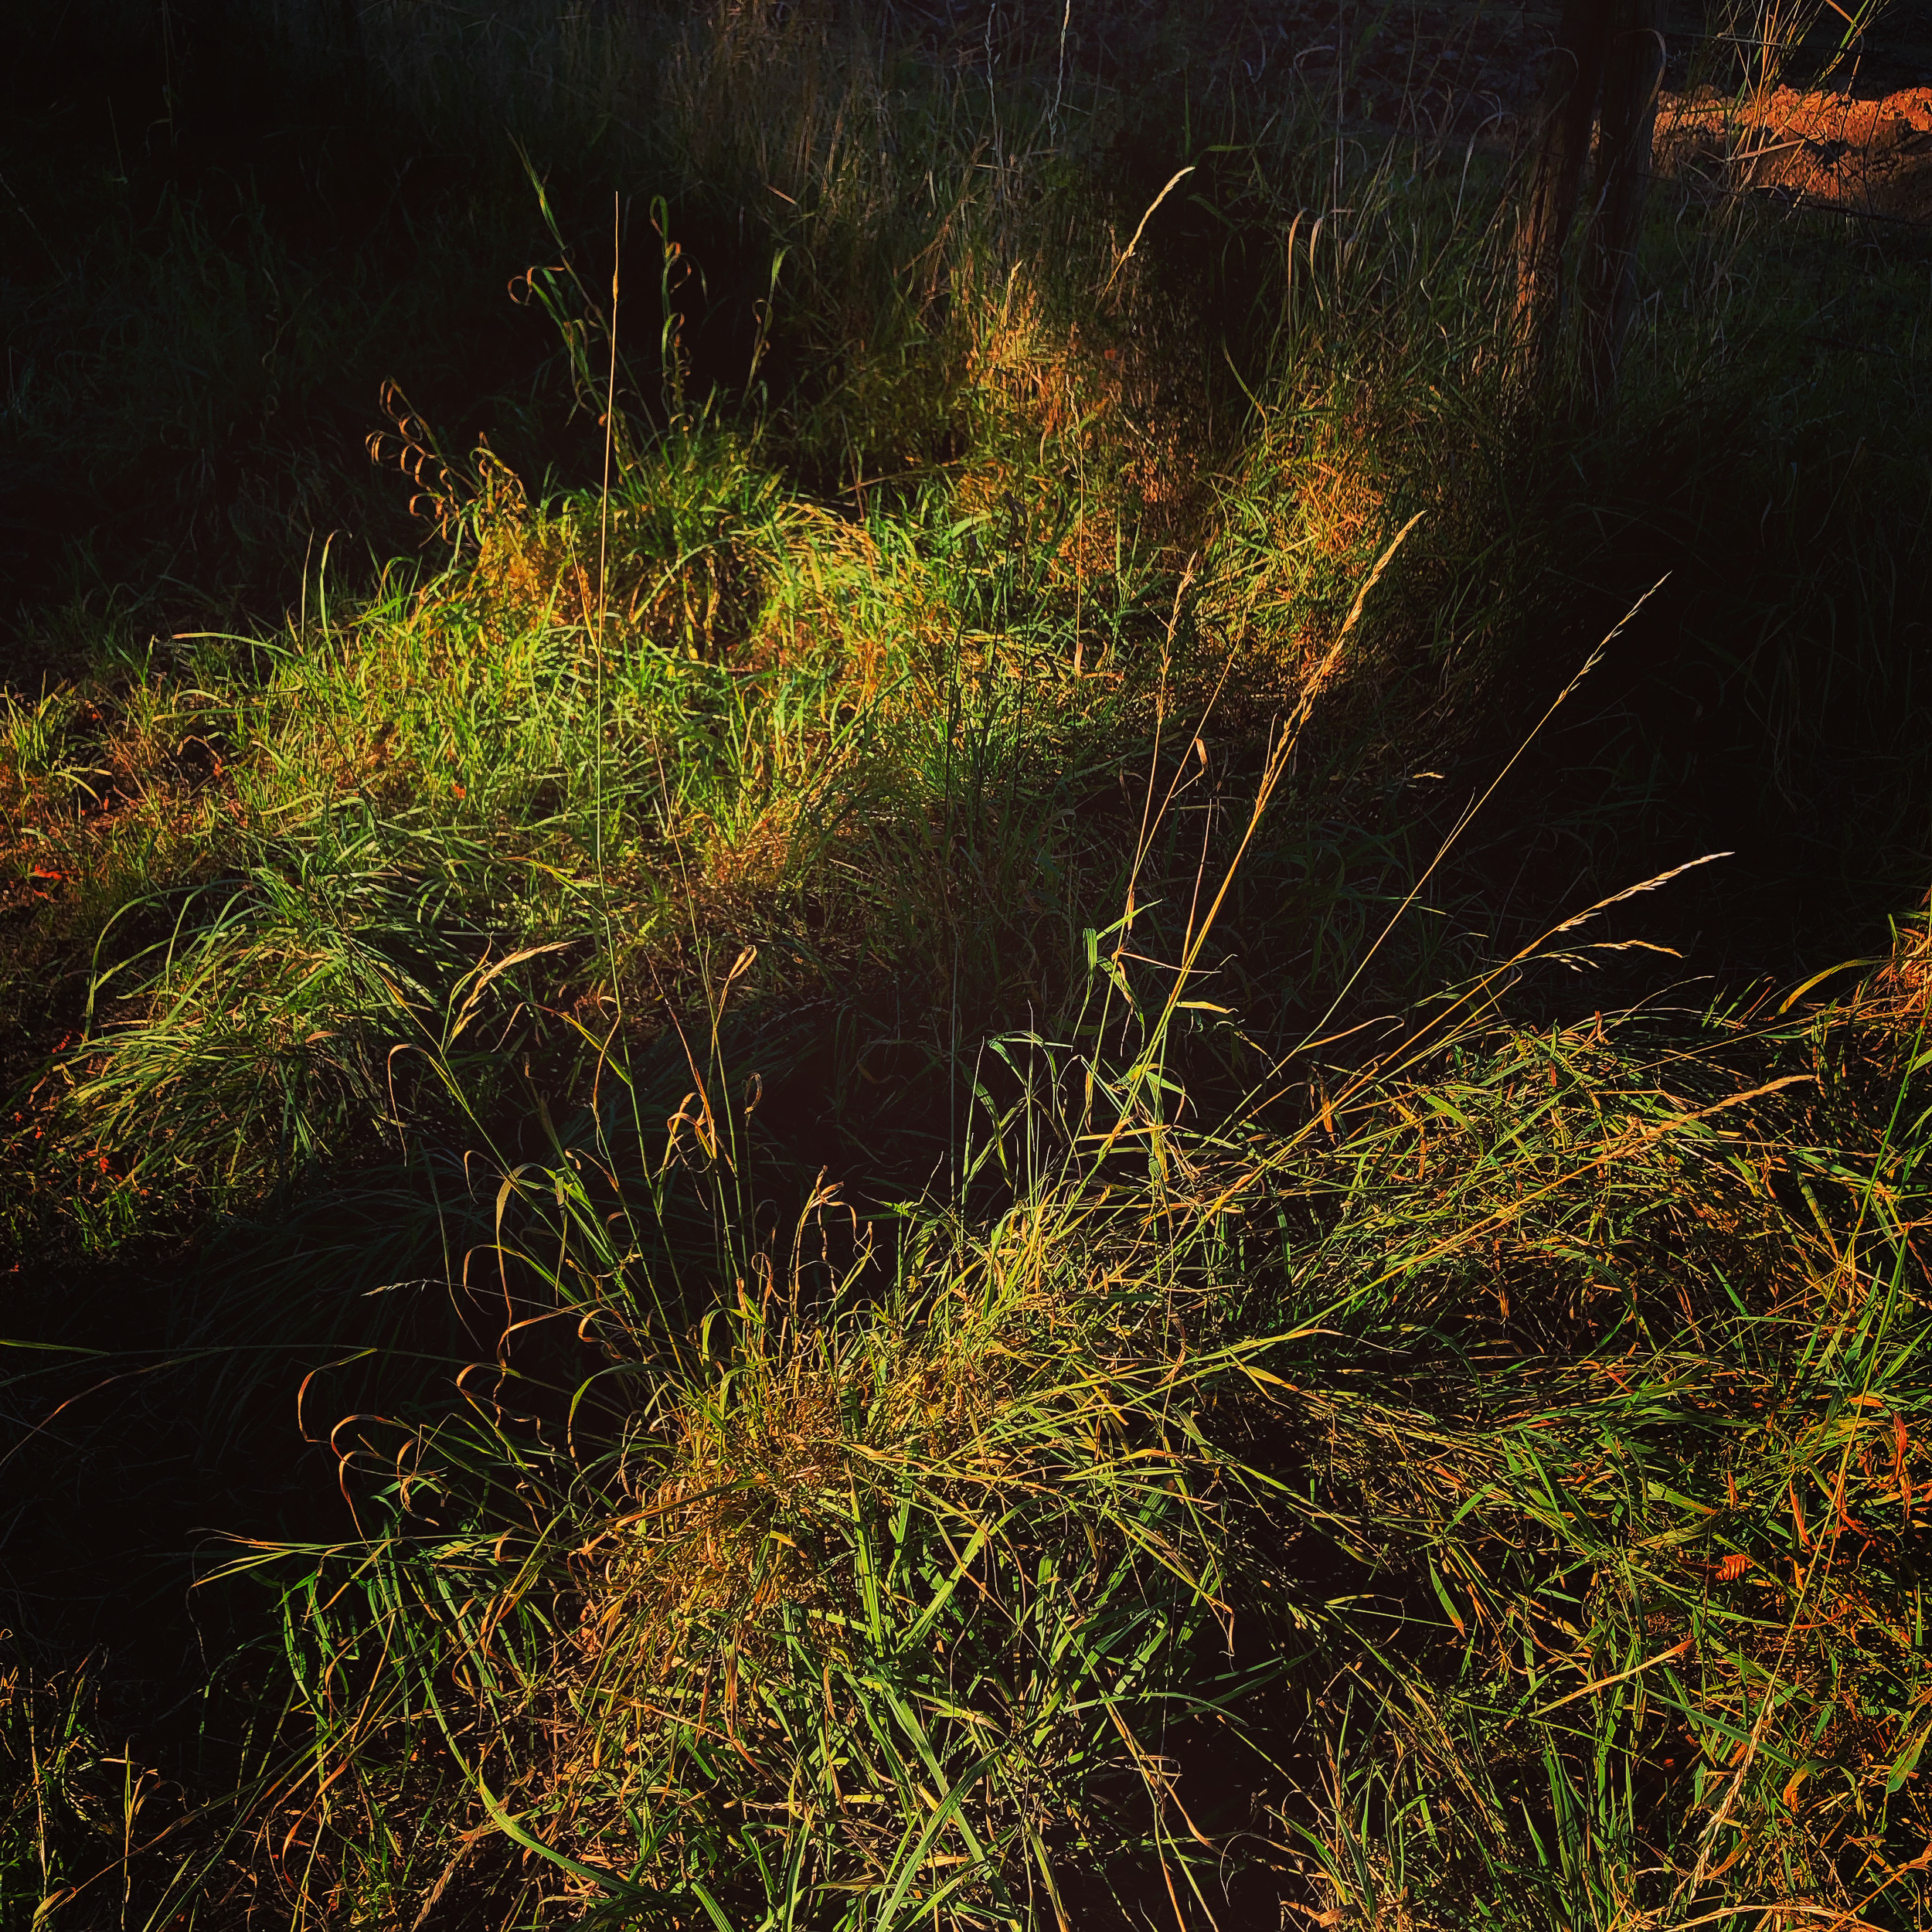 Layered grass